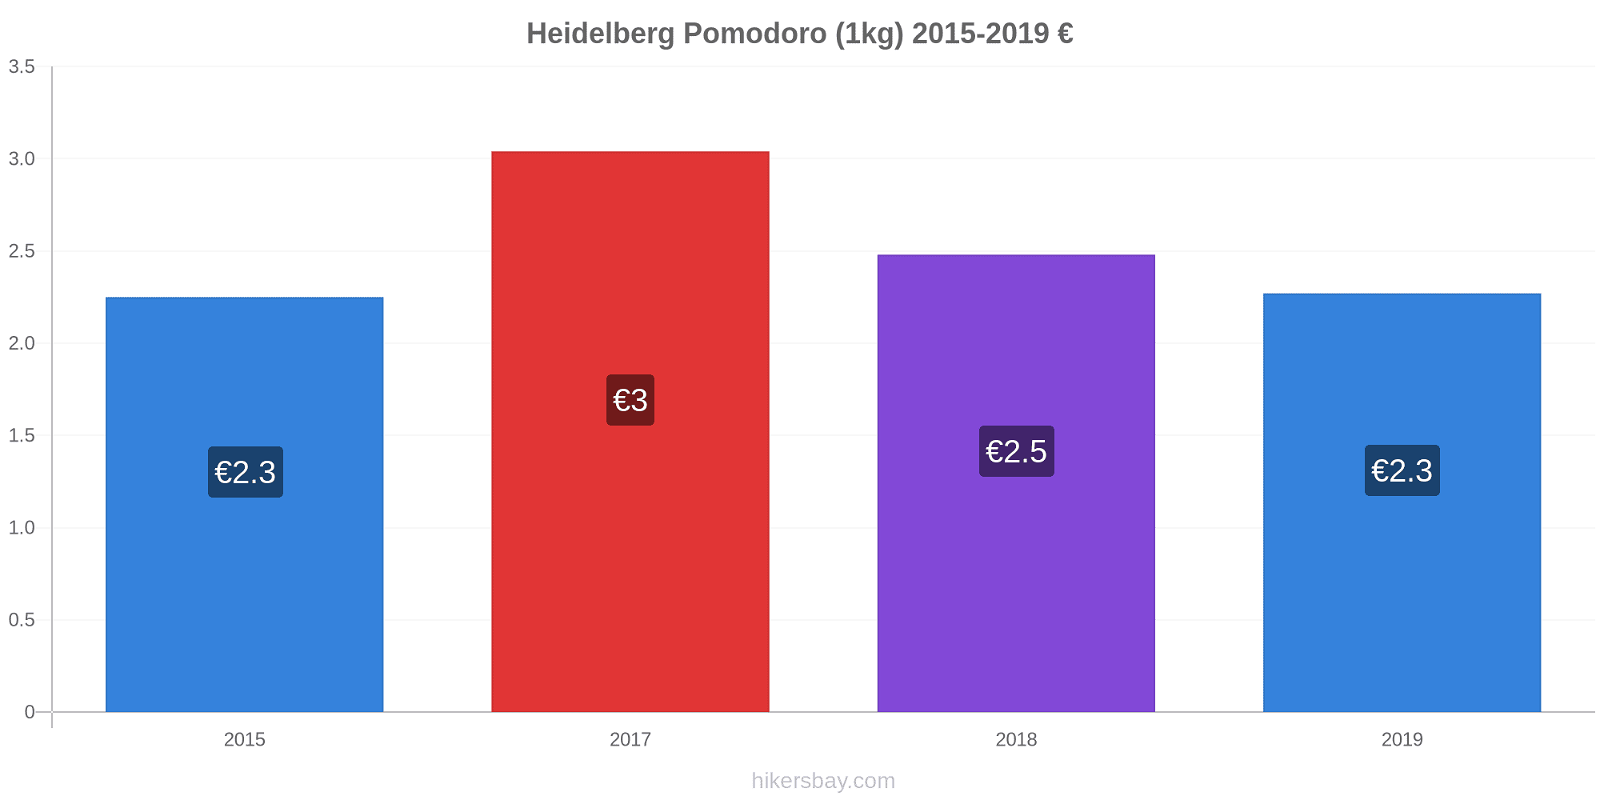 Heidelberg variazioni di prezzo Pomodoro (1kg) hikersbay.com